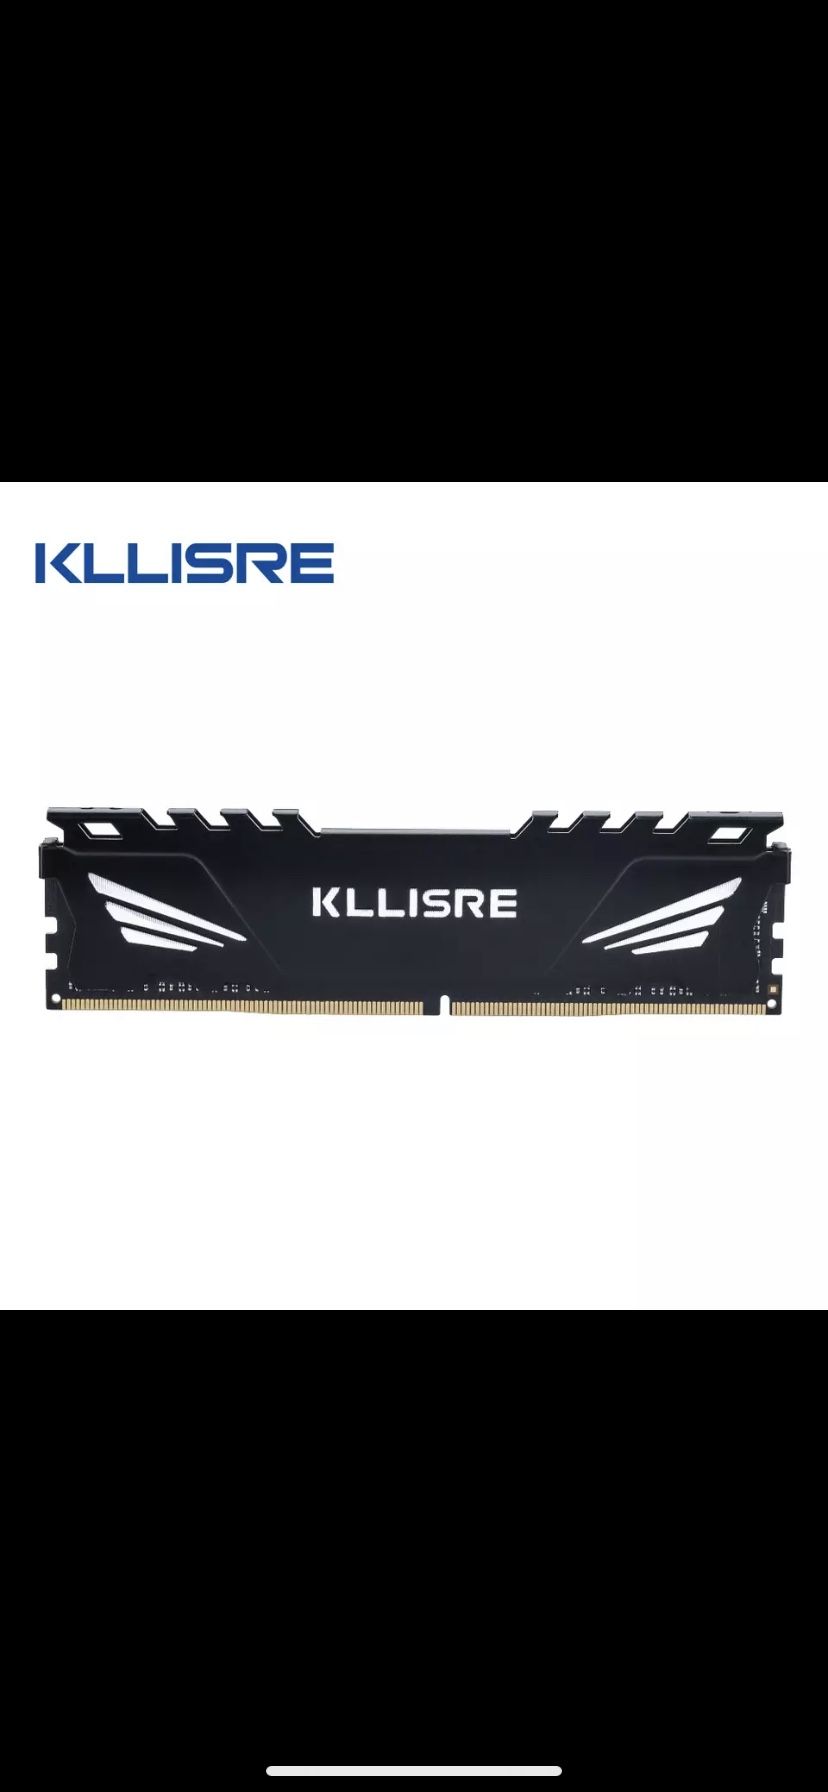 Kllisre DDR3 DDR4 4GB 8GB 16GB 1 2 3200 Desktop Memory with Heat Sink DDR 3 ram pc dimm for all motherboards